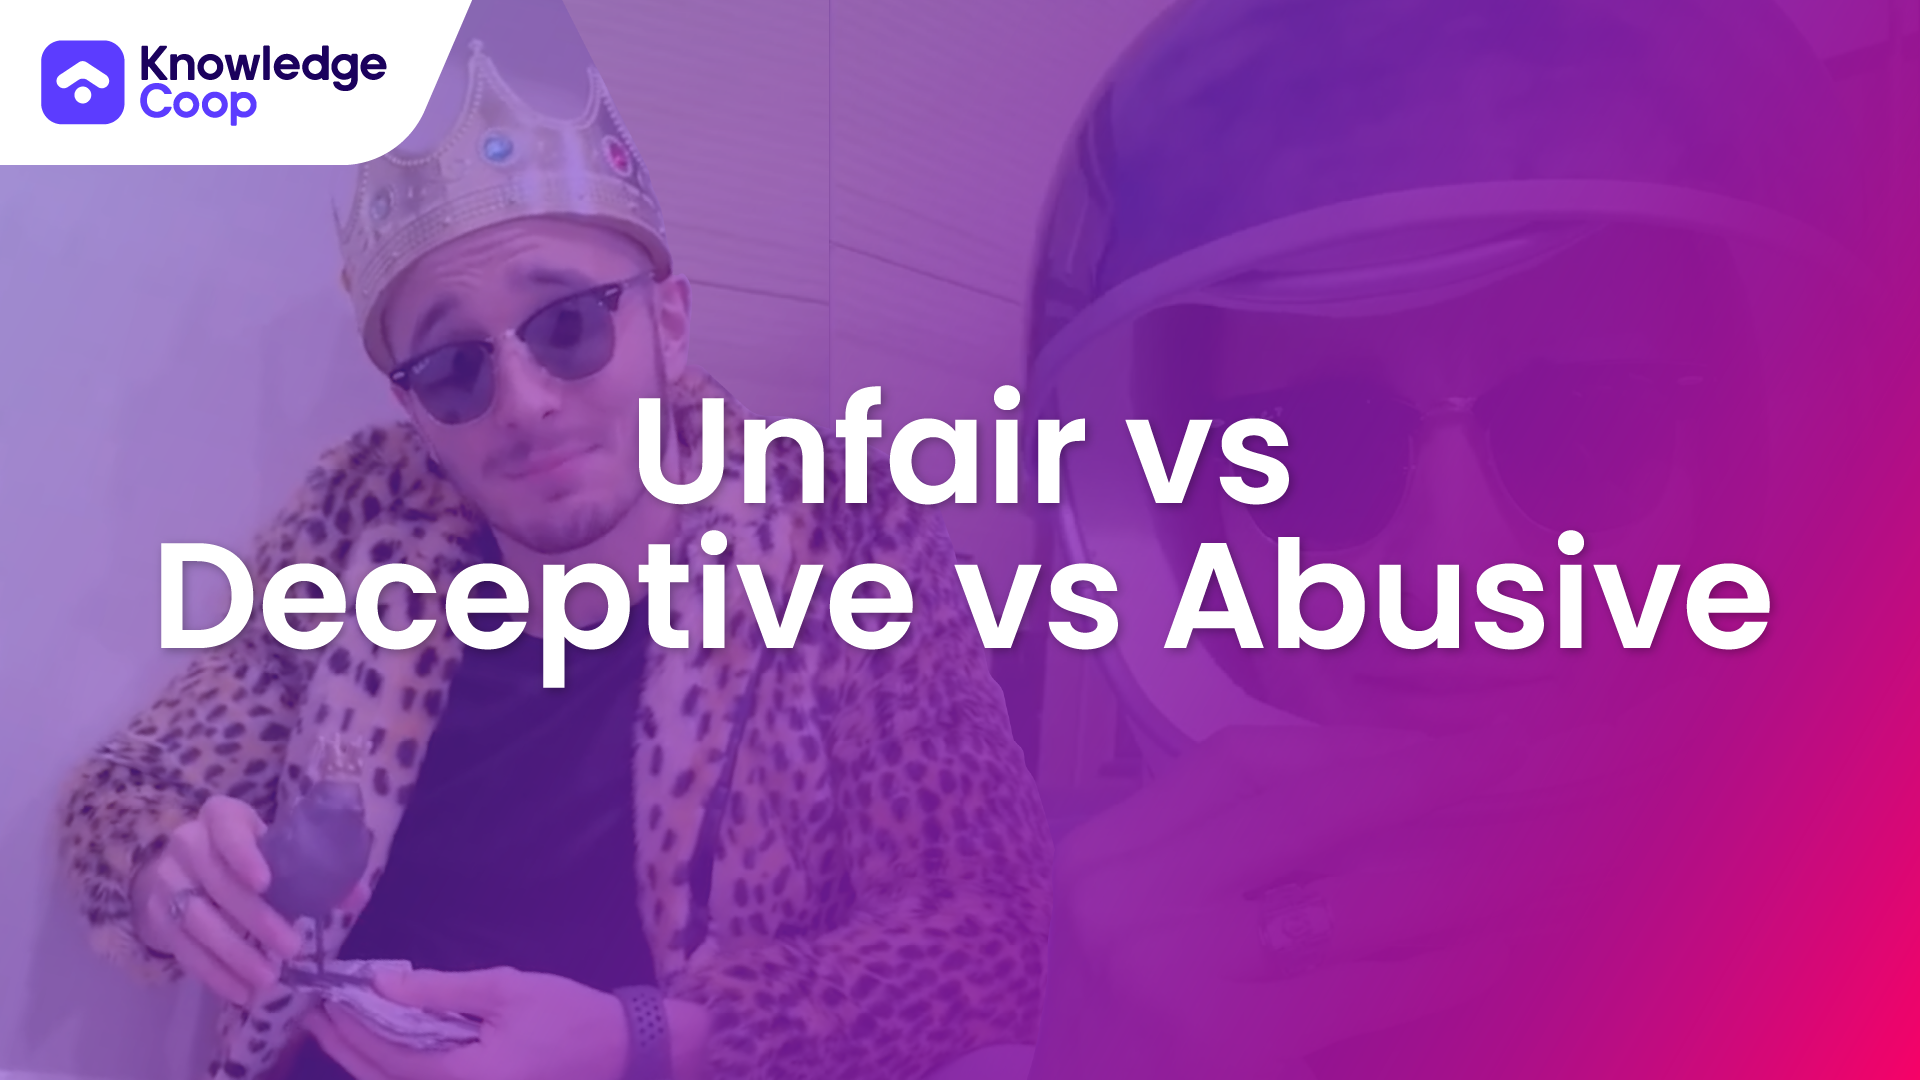 UDAAP: Unfair vs Deceptive vs Abusive